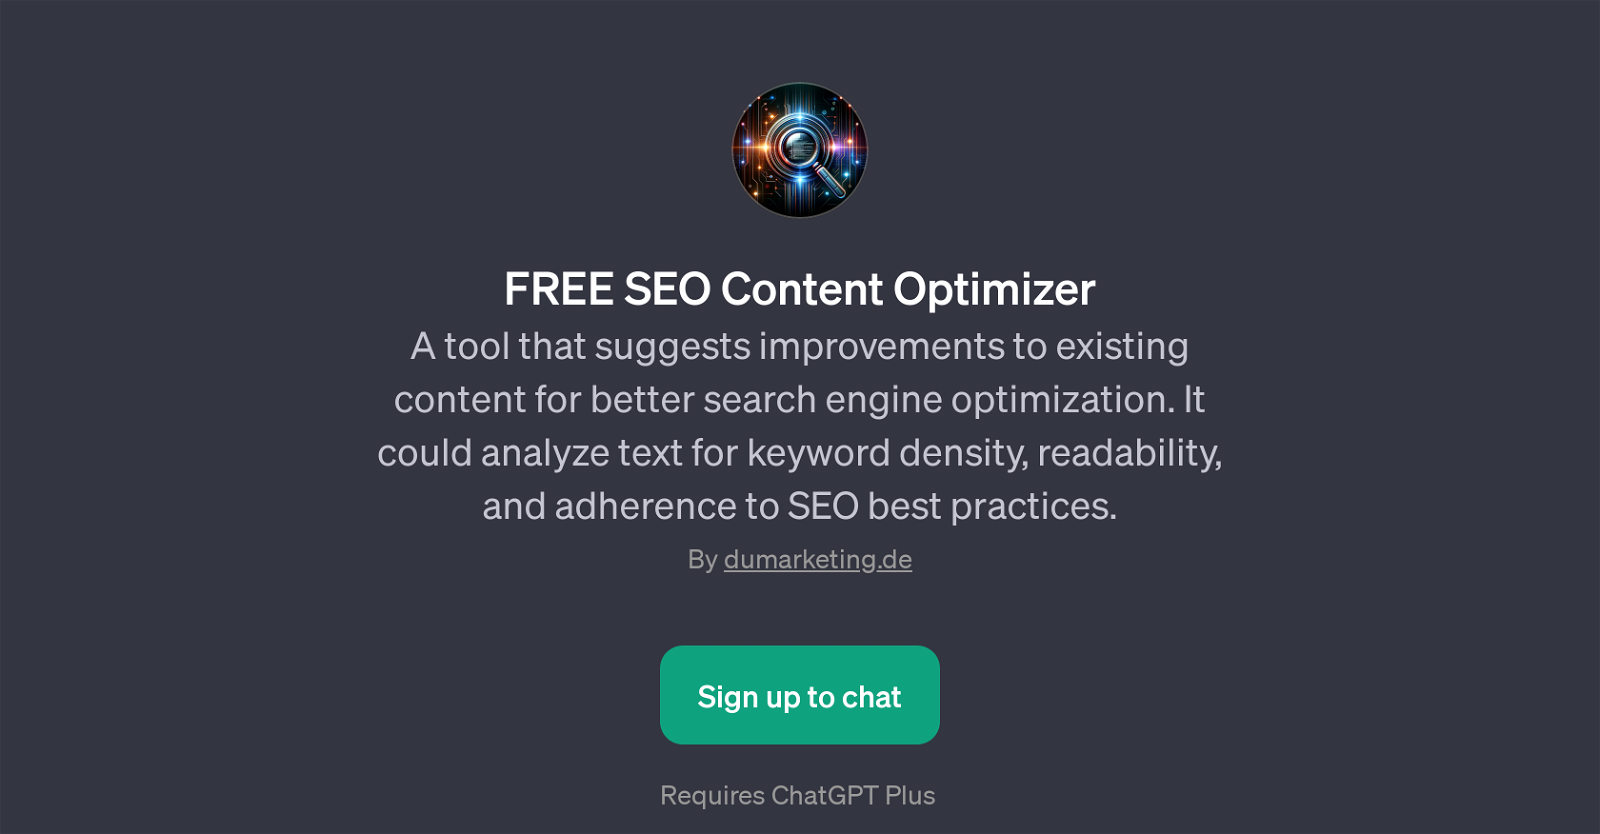 FREE SEO Content Optimizer GPT website